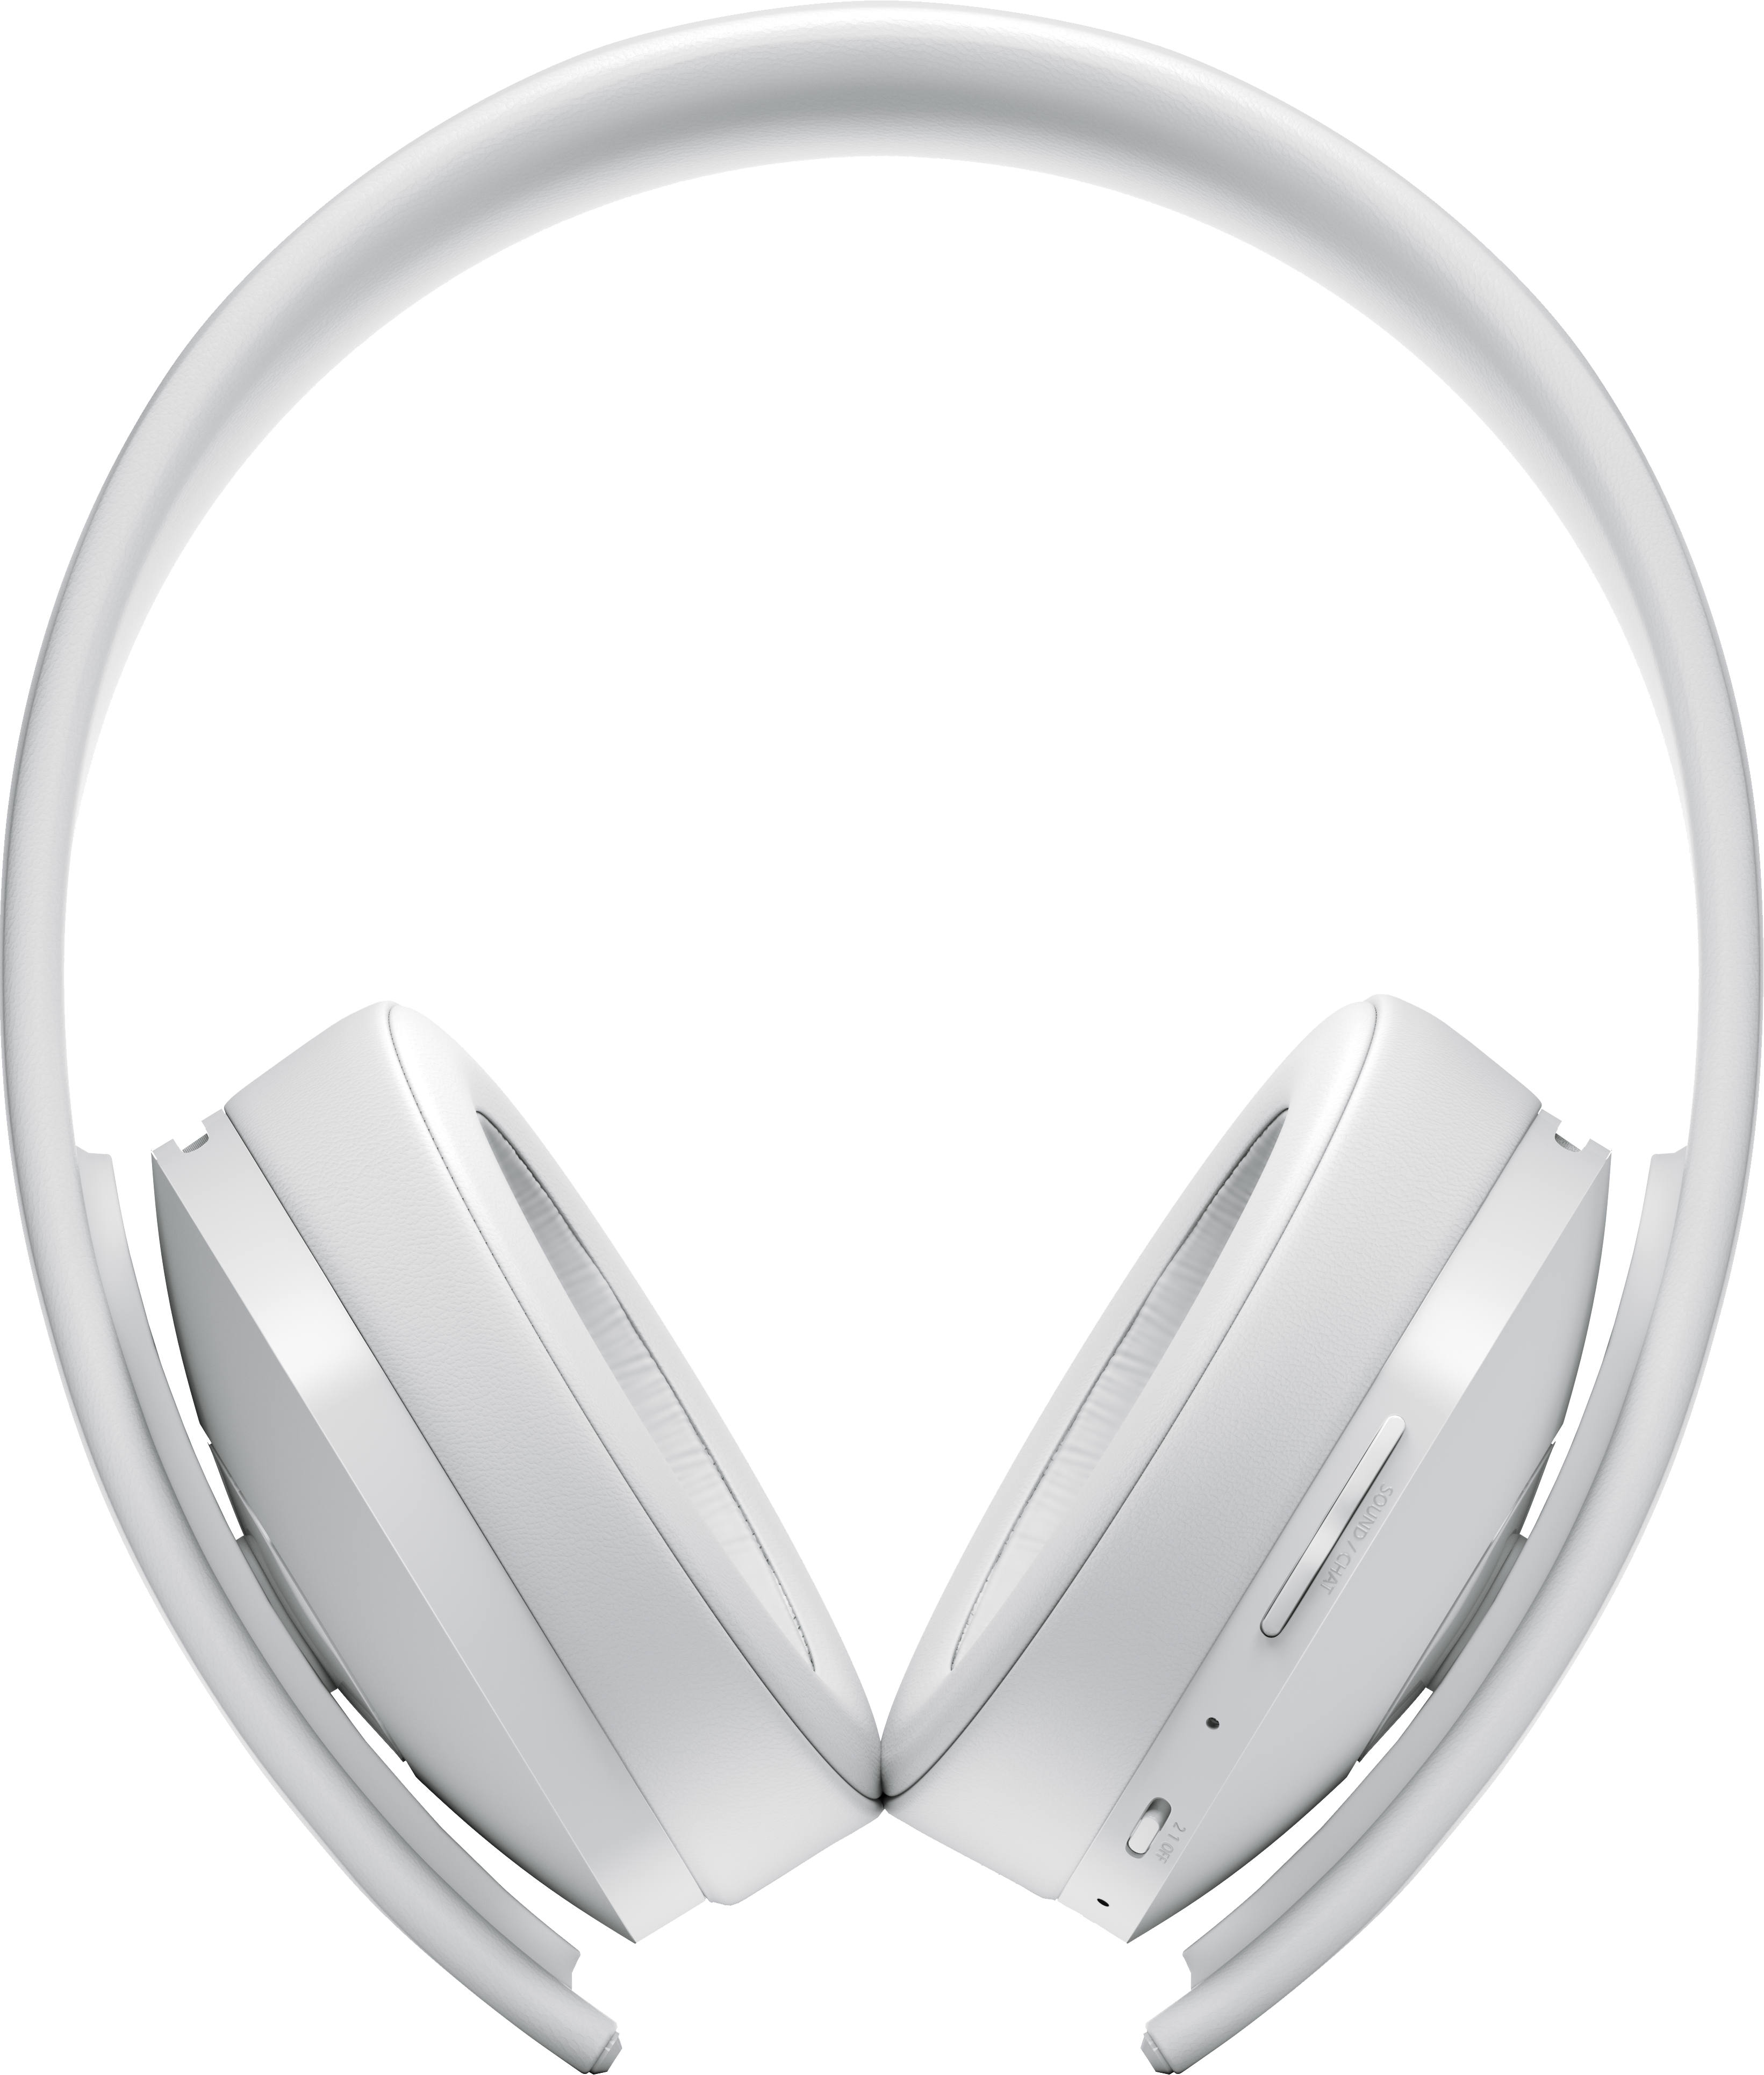 Gold Wireless Stereo Headset v2 (White)